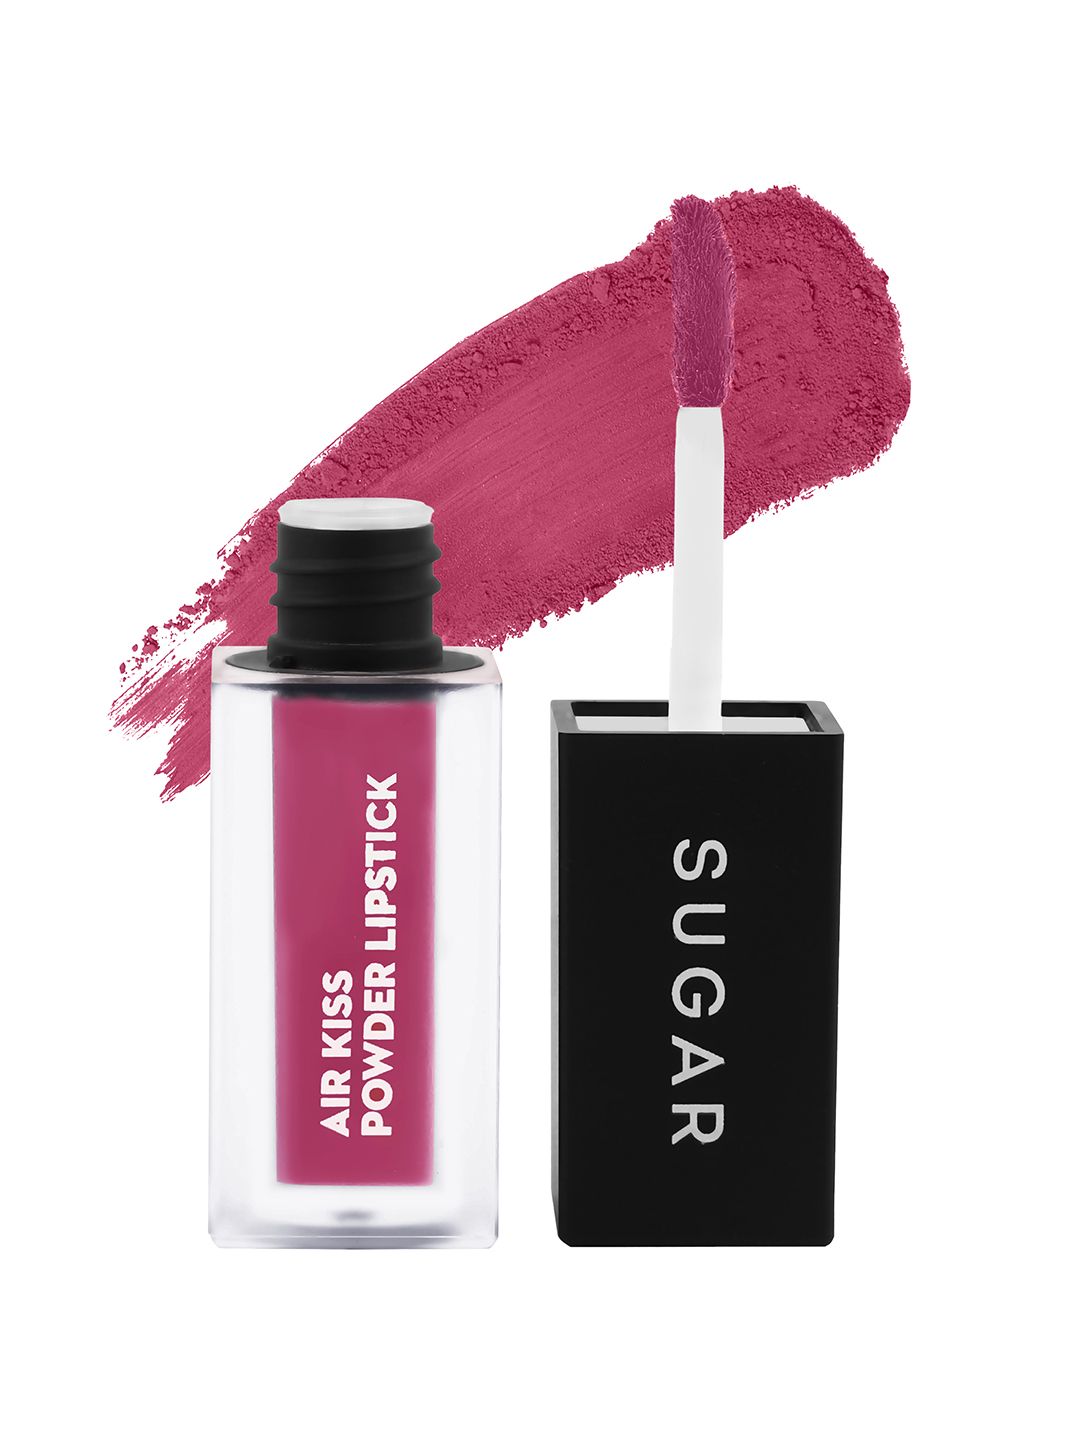 SUGAR Air Kiss Powder Lipstick - Candyfloss 02 Price in India